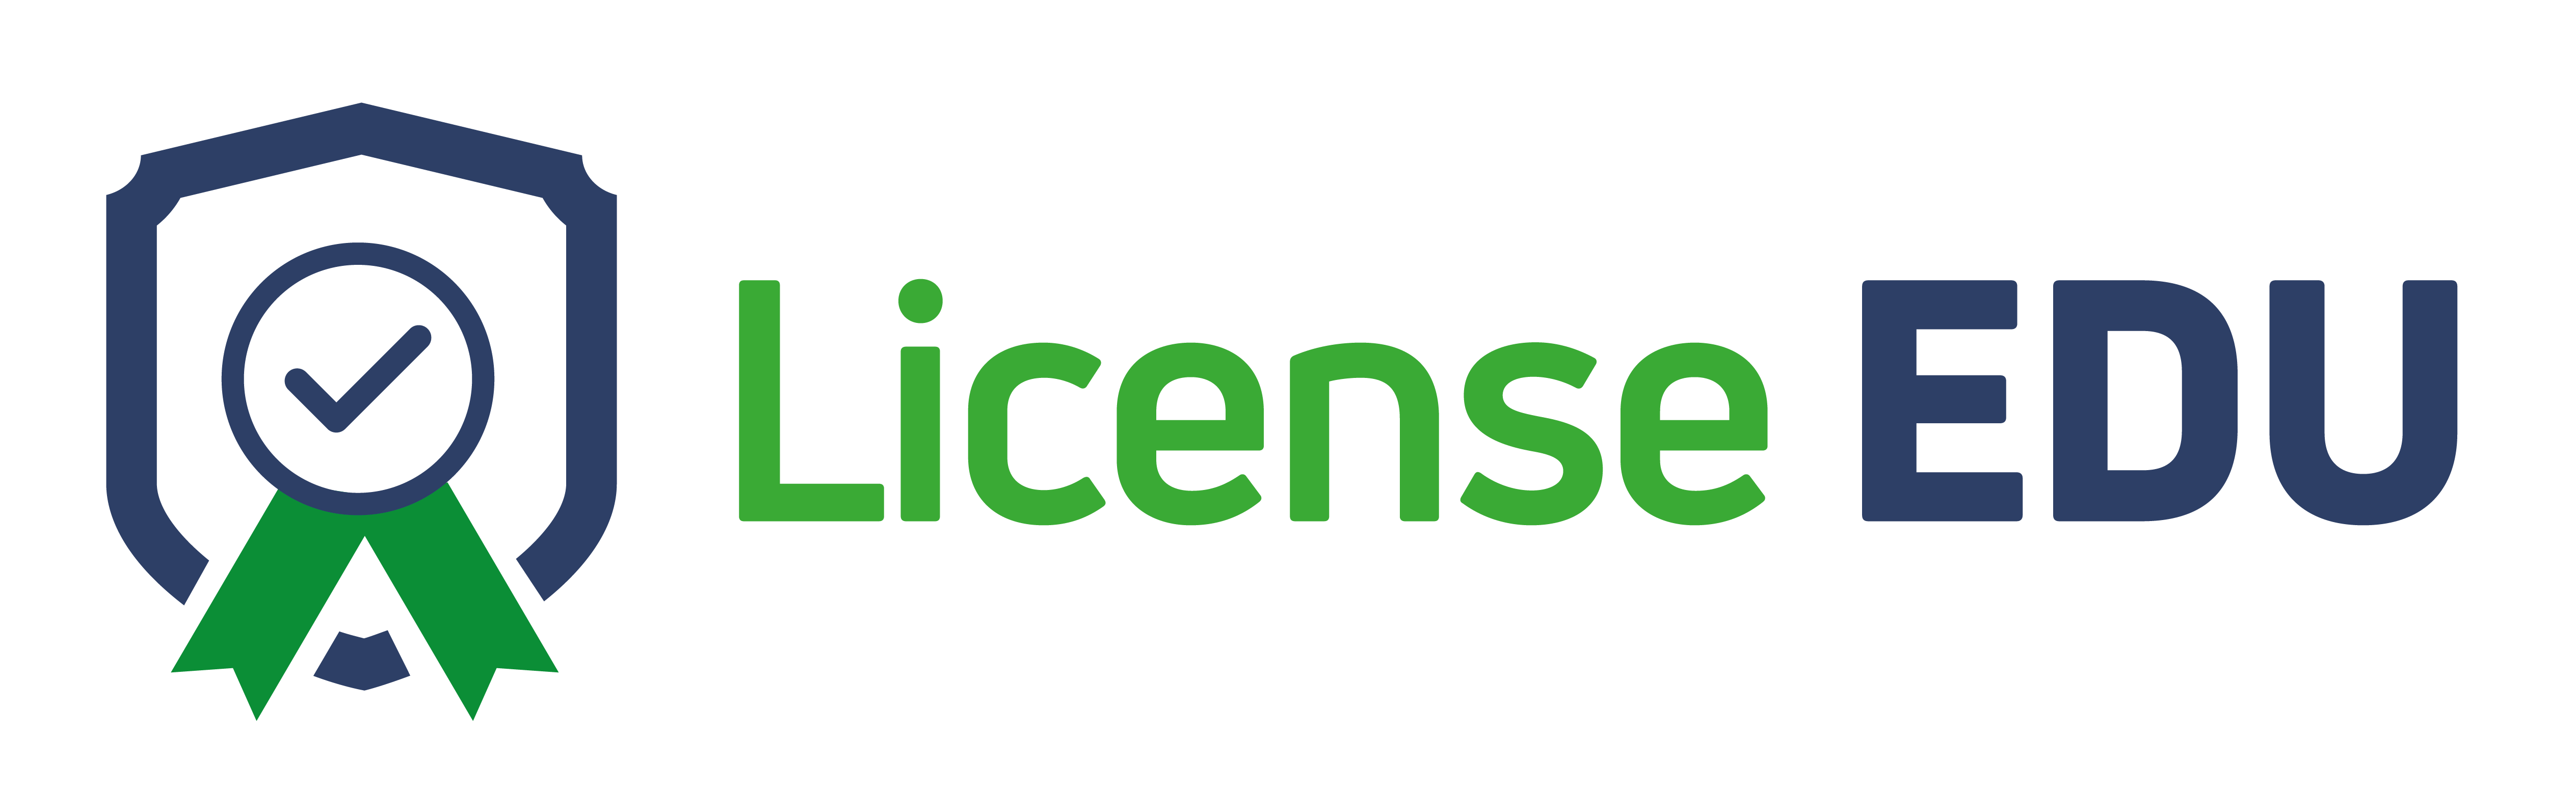 LicenseEDU Logo